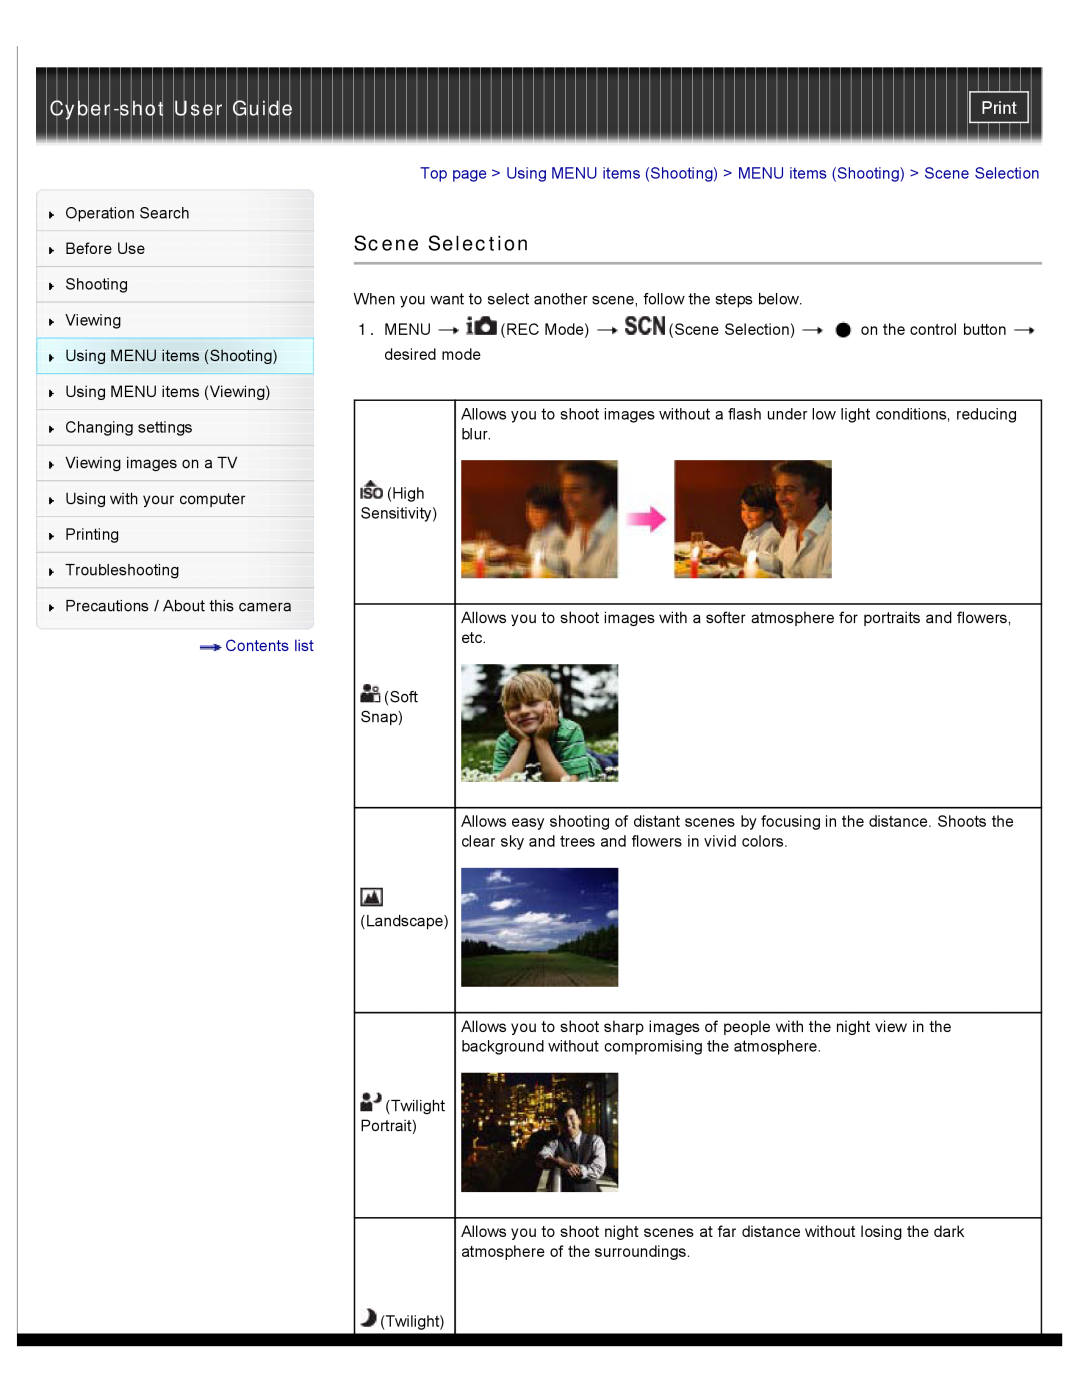 Sony DSC-W510 manual Cyber-shot User Guide, Scene Selection, Print, Contents list 